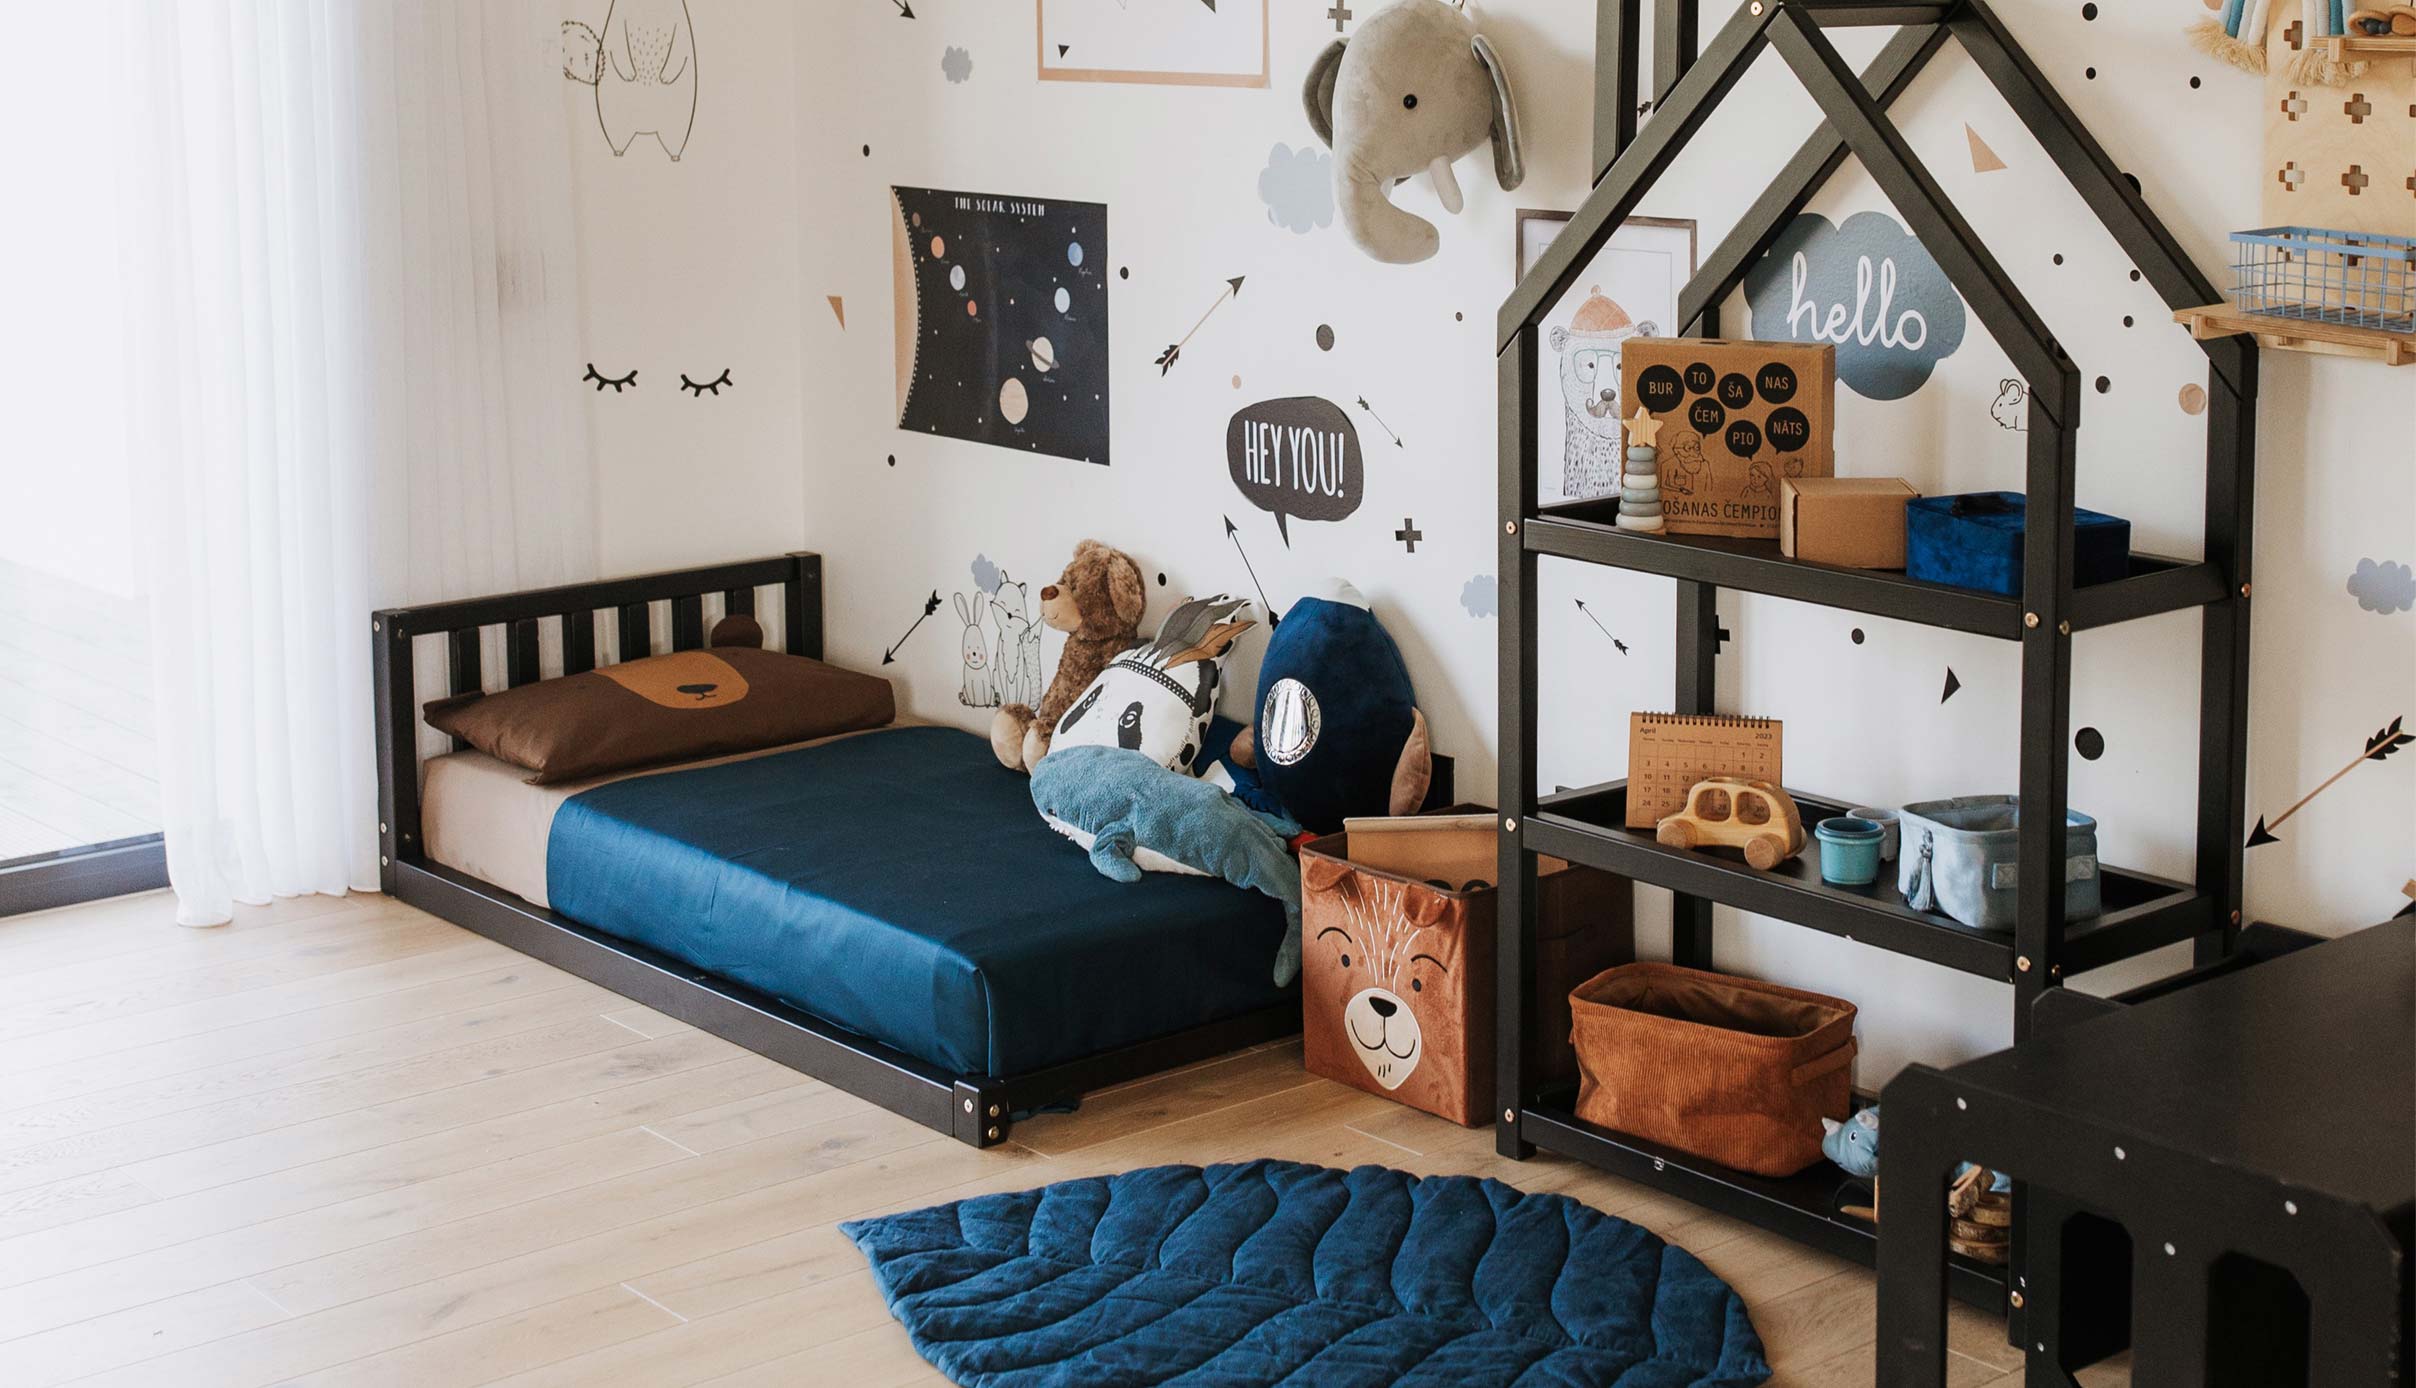 A boy's room with a bed, bookshelf, and a teddy bear.